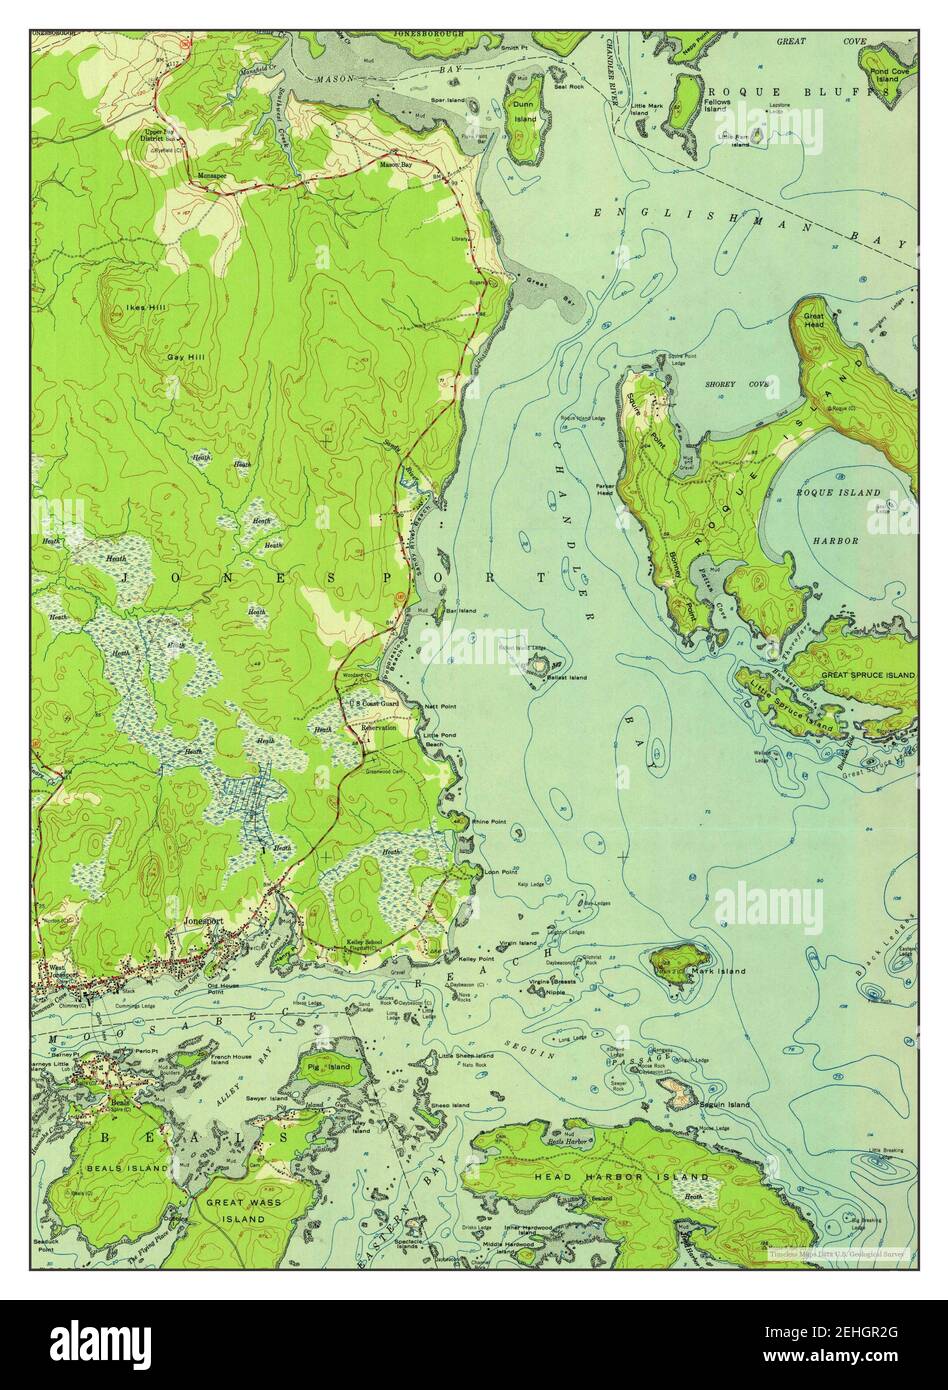 Jonesport, Maine, map 1951, 1:24000, United States of America by Timeless Maps, data U.S. Geological Survey Stock Photo